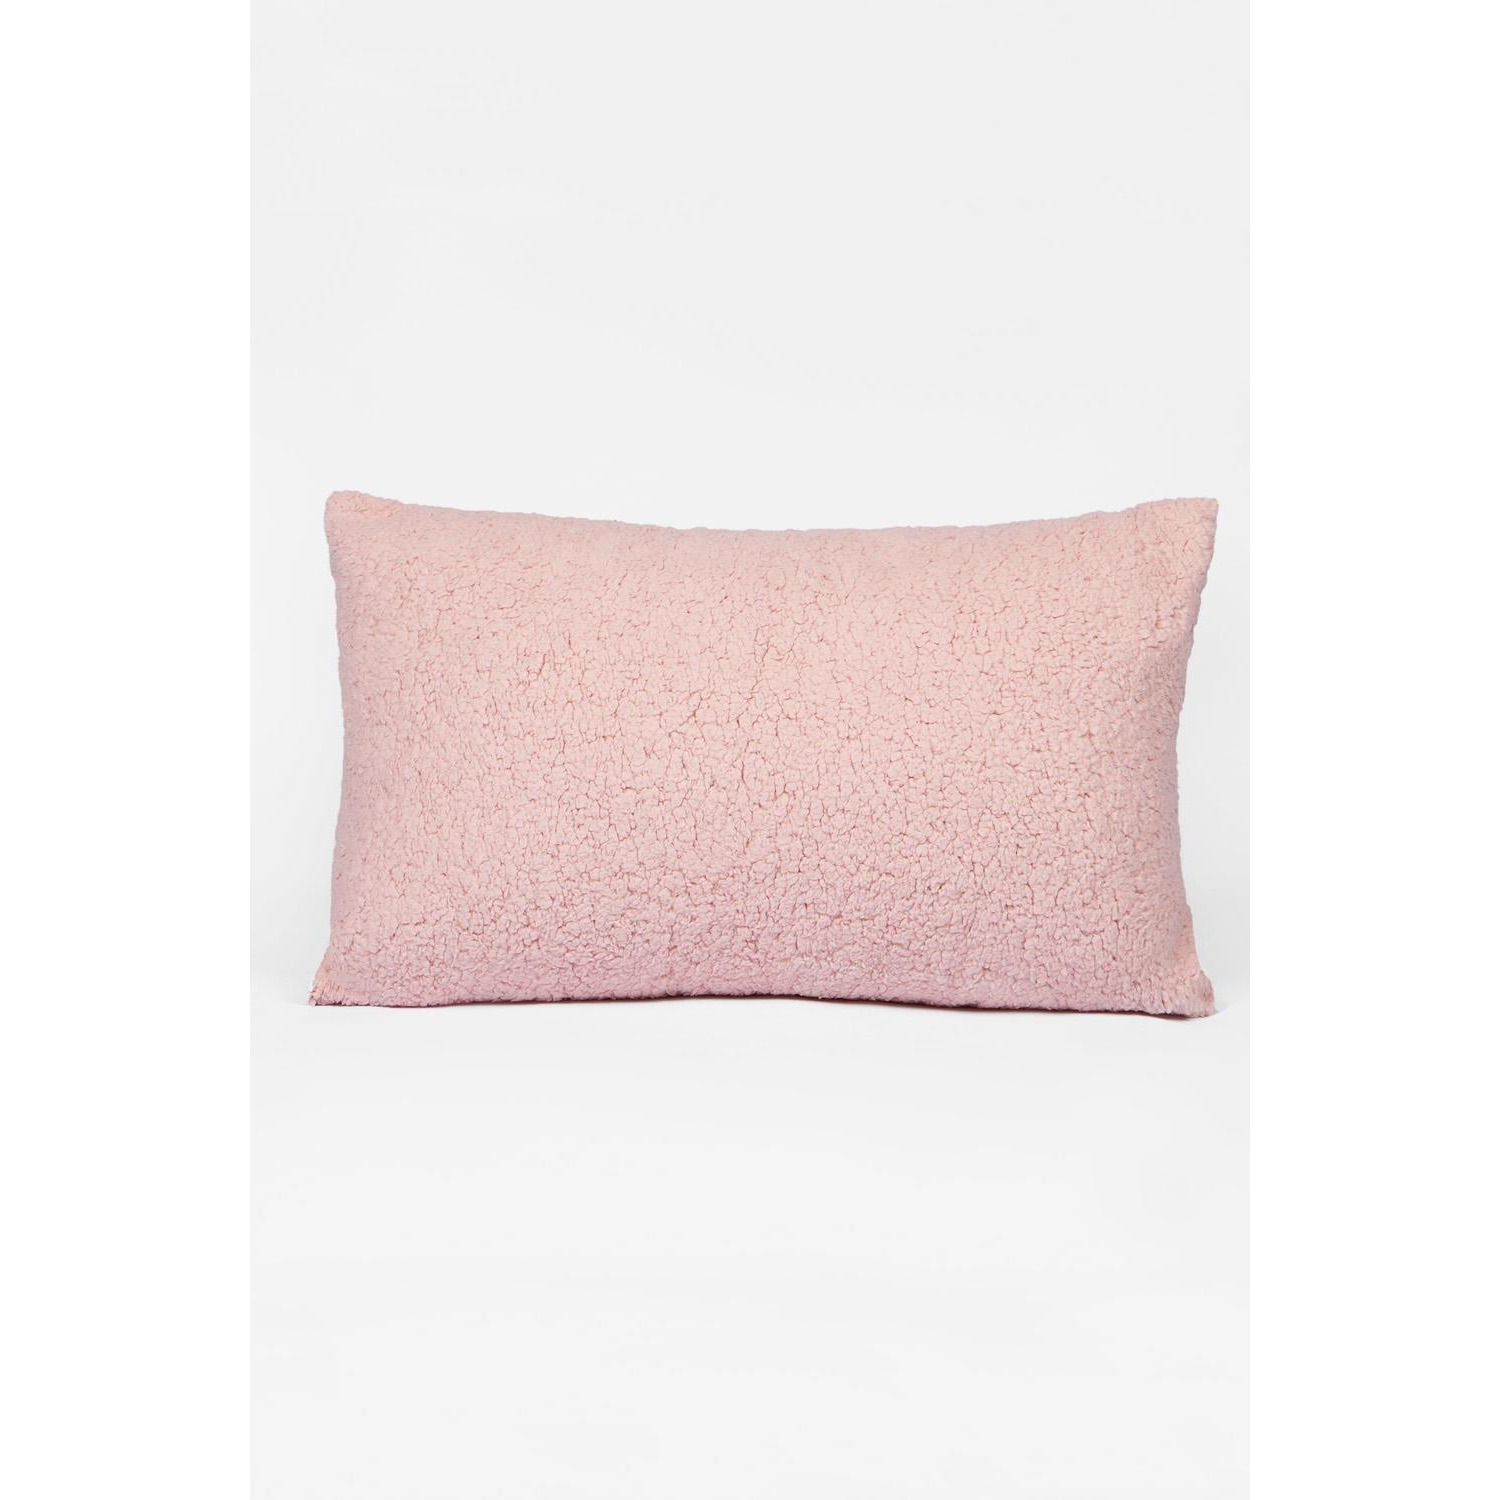 Teddy Fleece Soft Filled Pillow Cushion - image 1